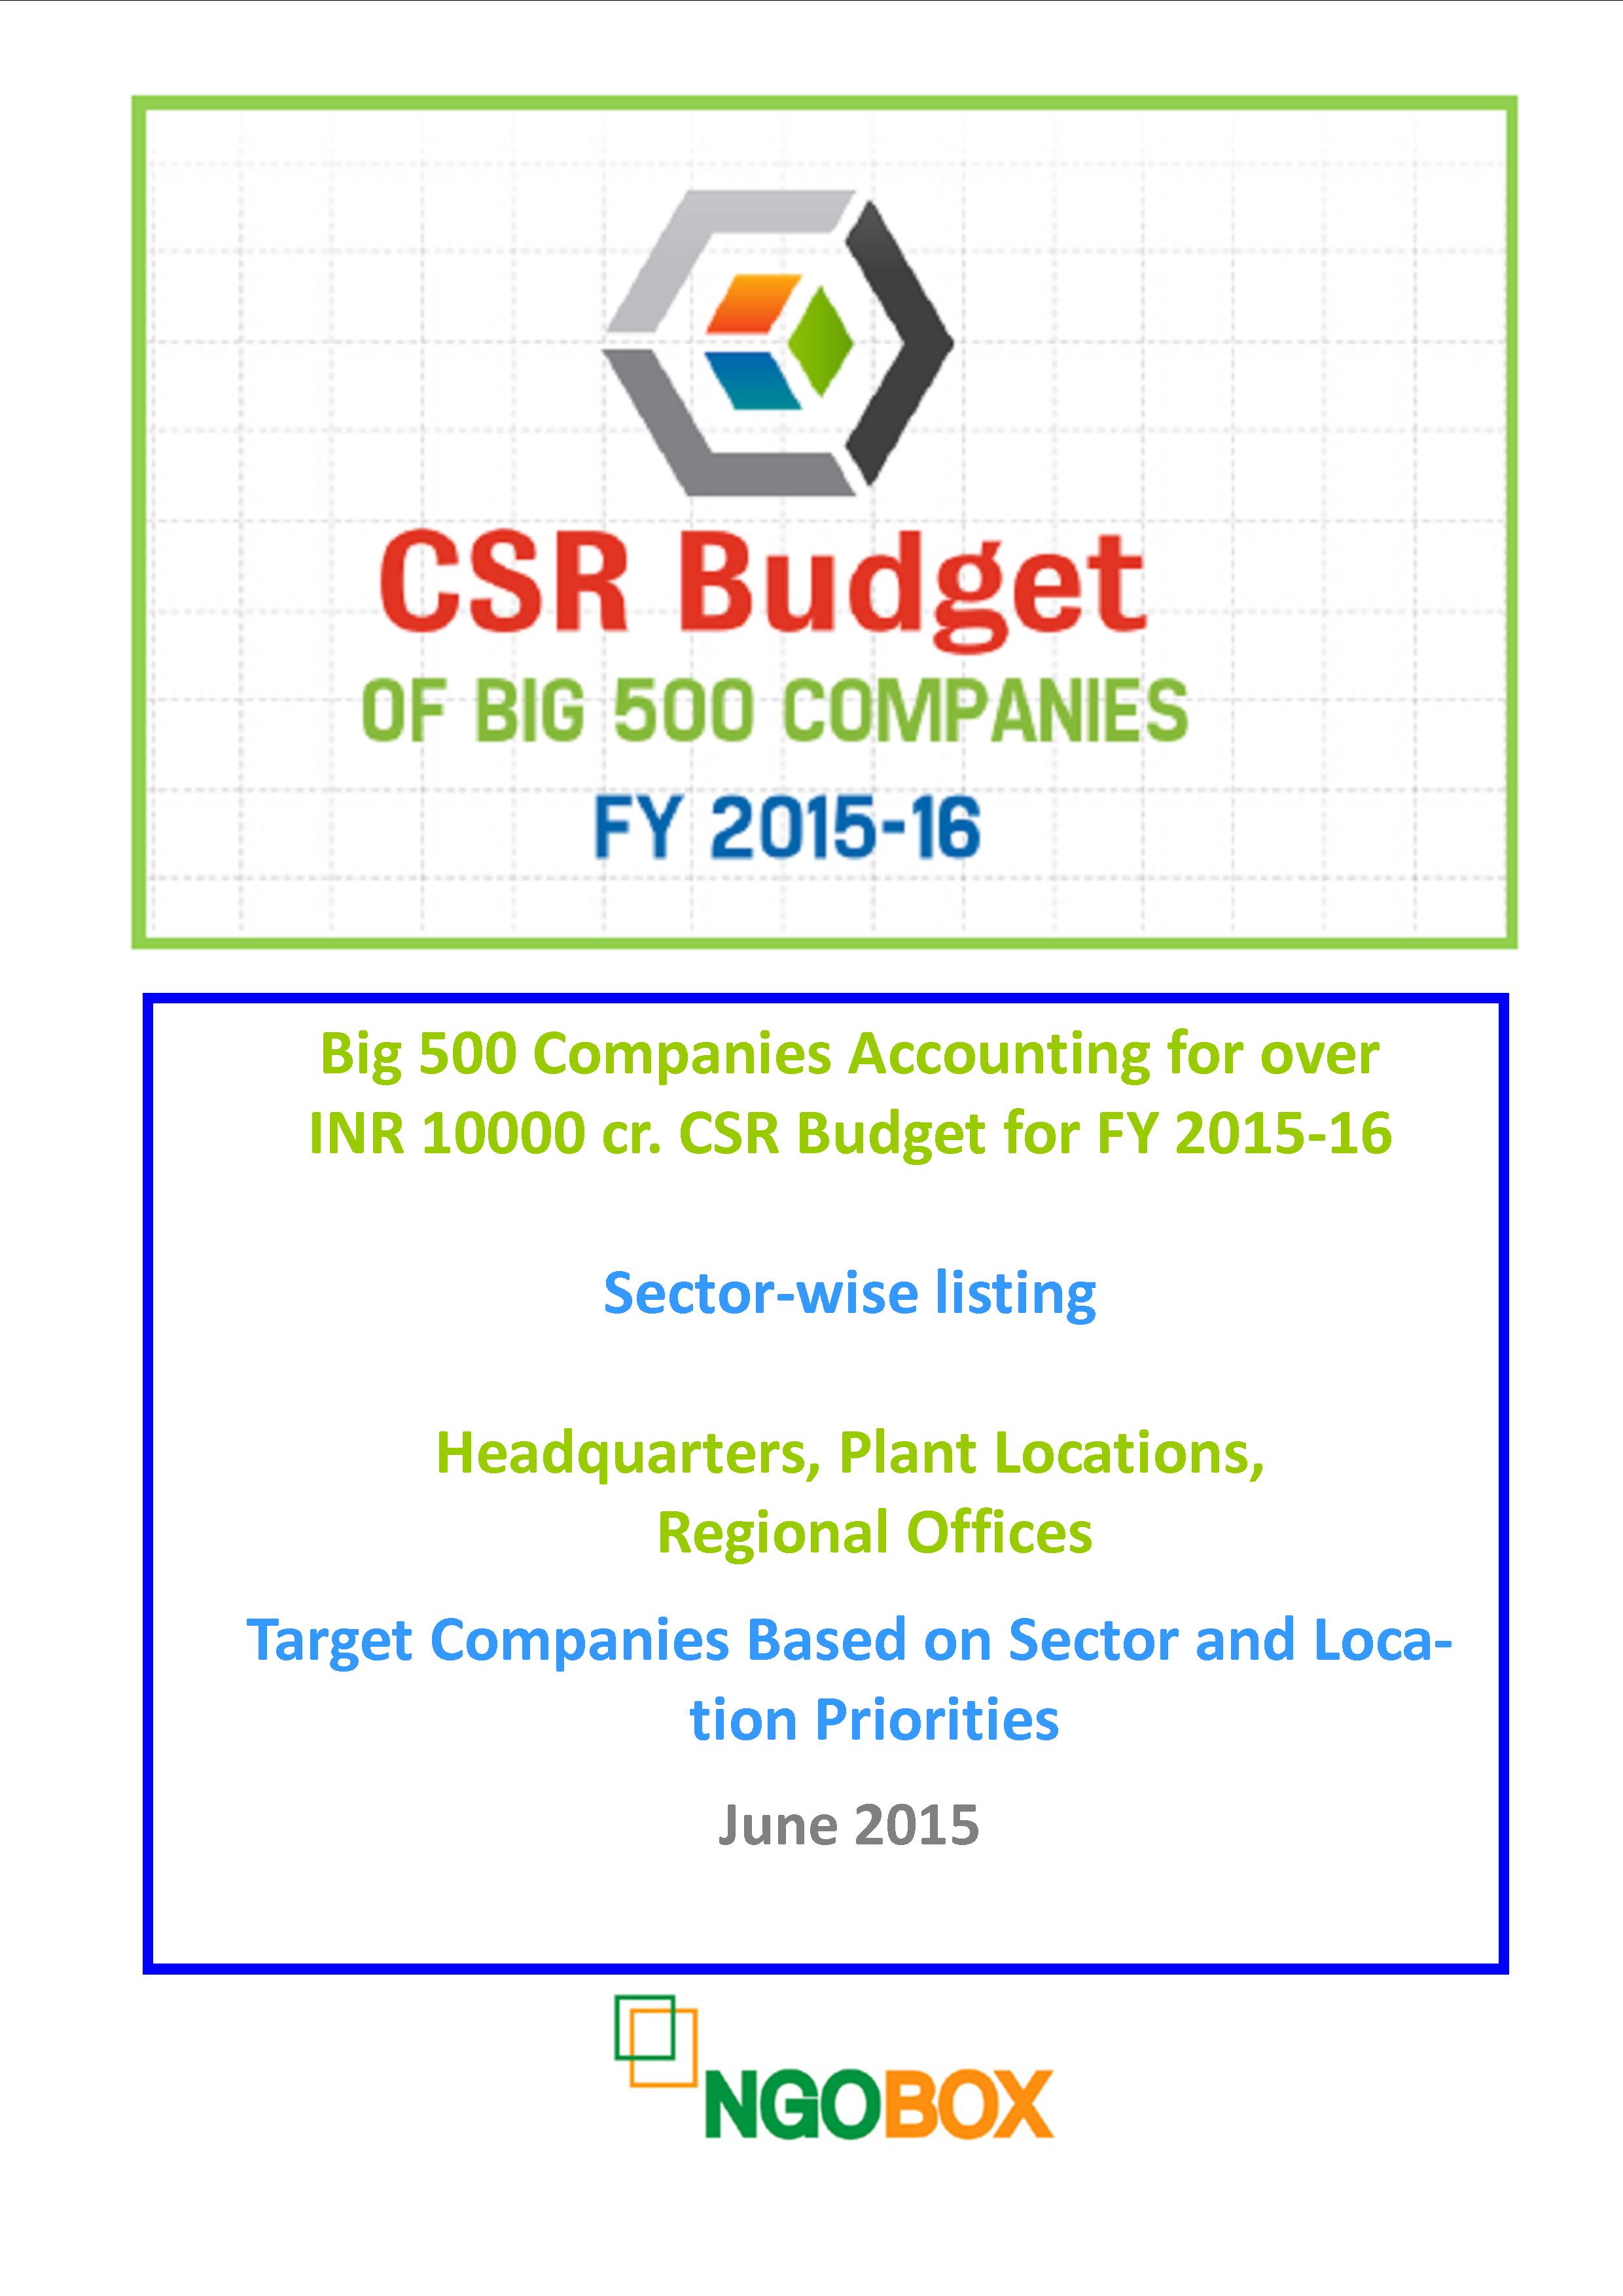 CSR Budget of Big 500 Companies in FY 2015-16